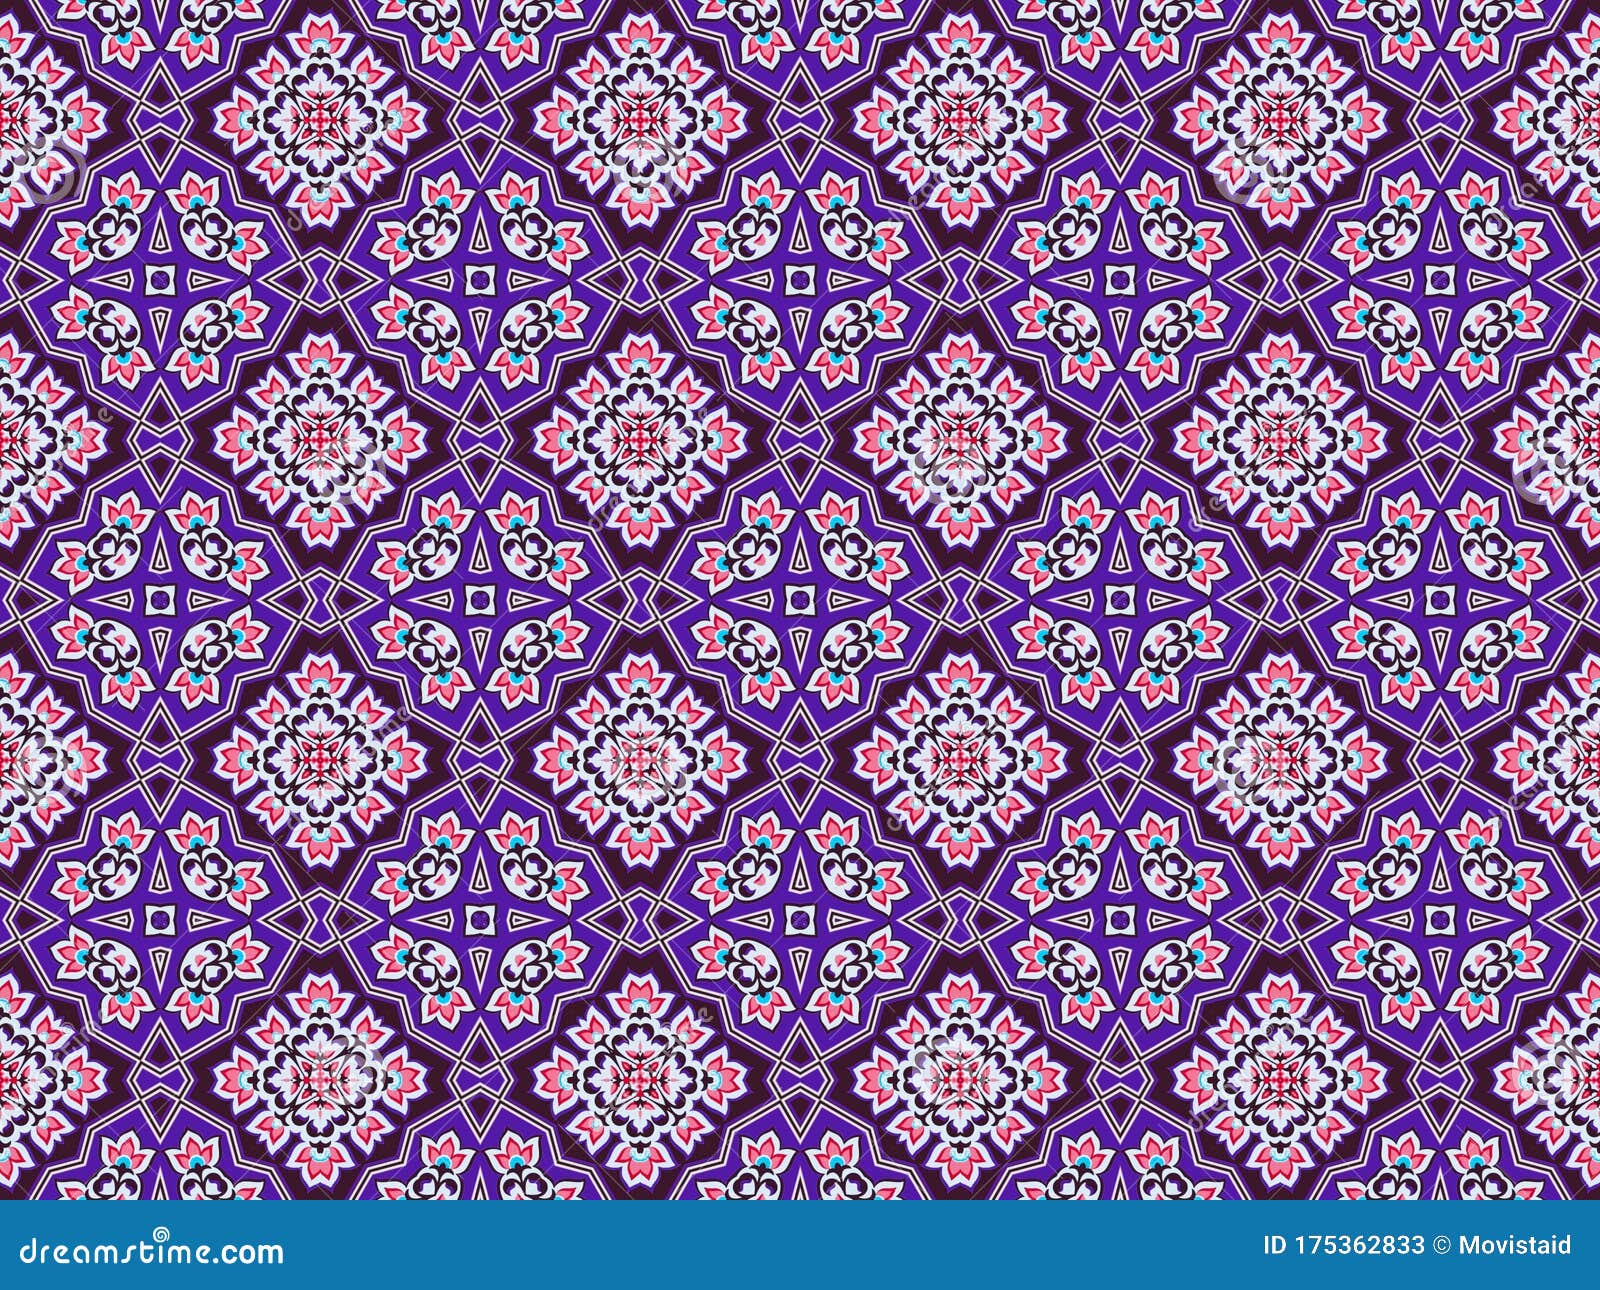 Islamic Art Pattern and Geometric Background Stock Image - Image of backdrop,  geometric: 175362833